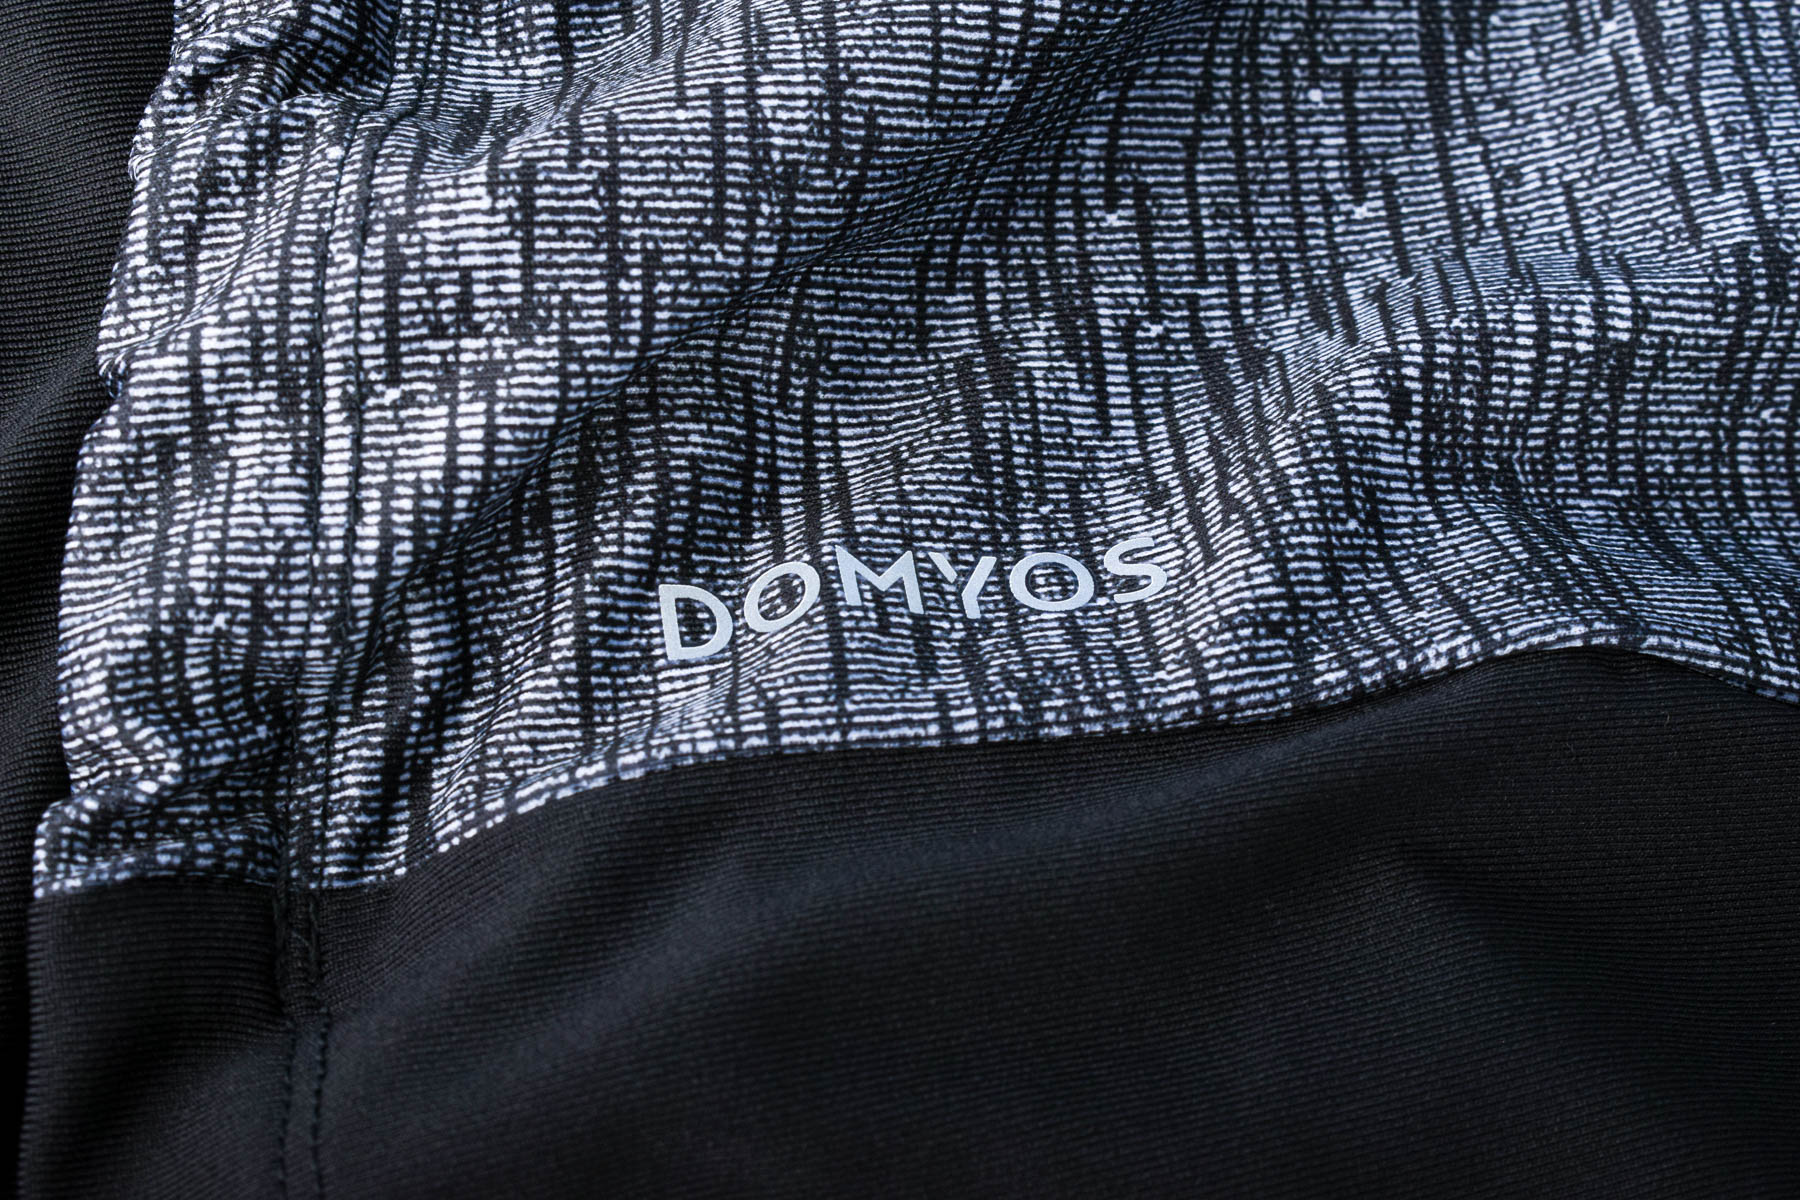 Women's t-shirt - Domyos - 2